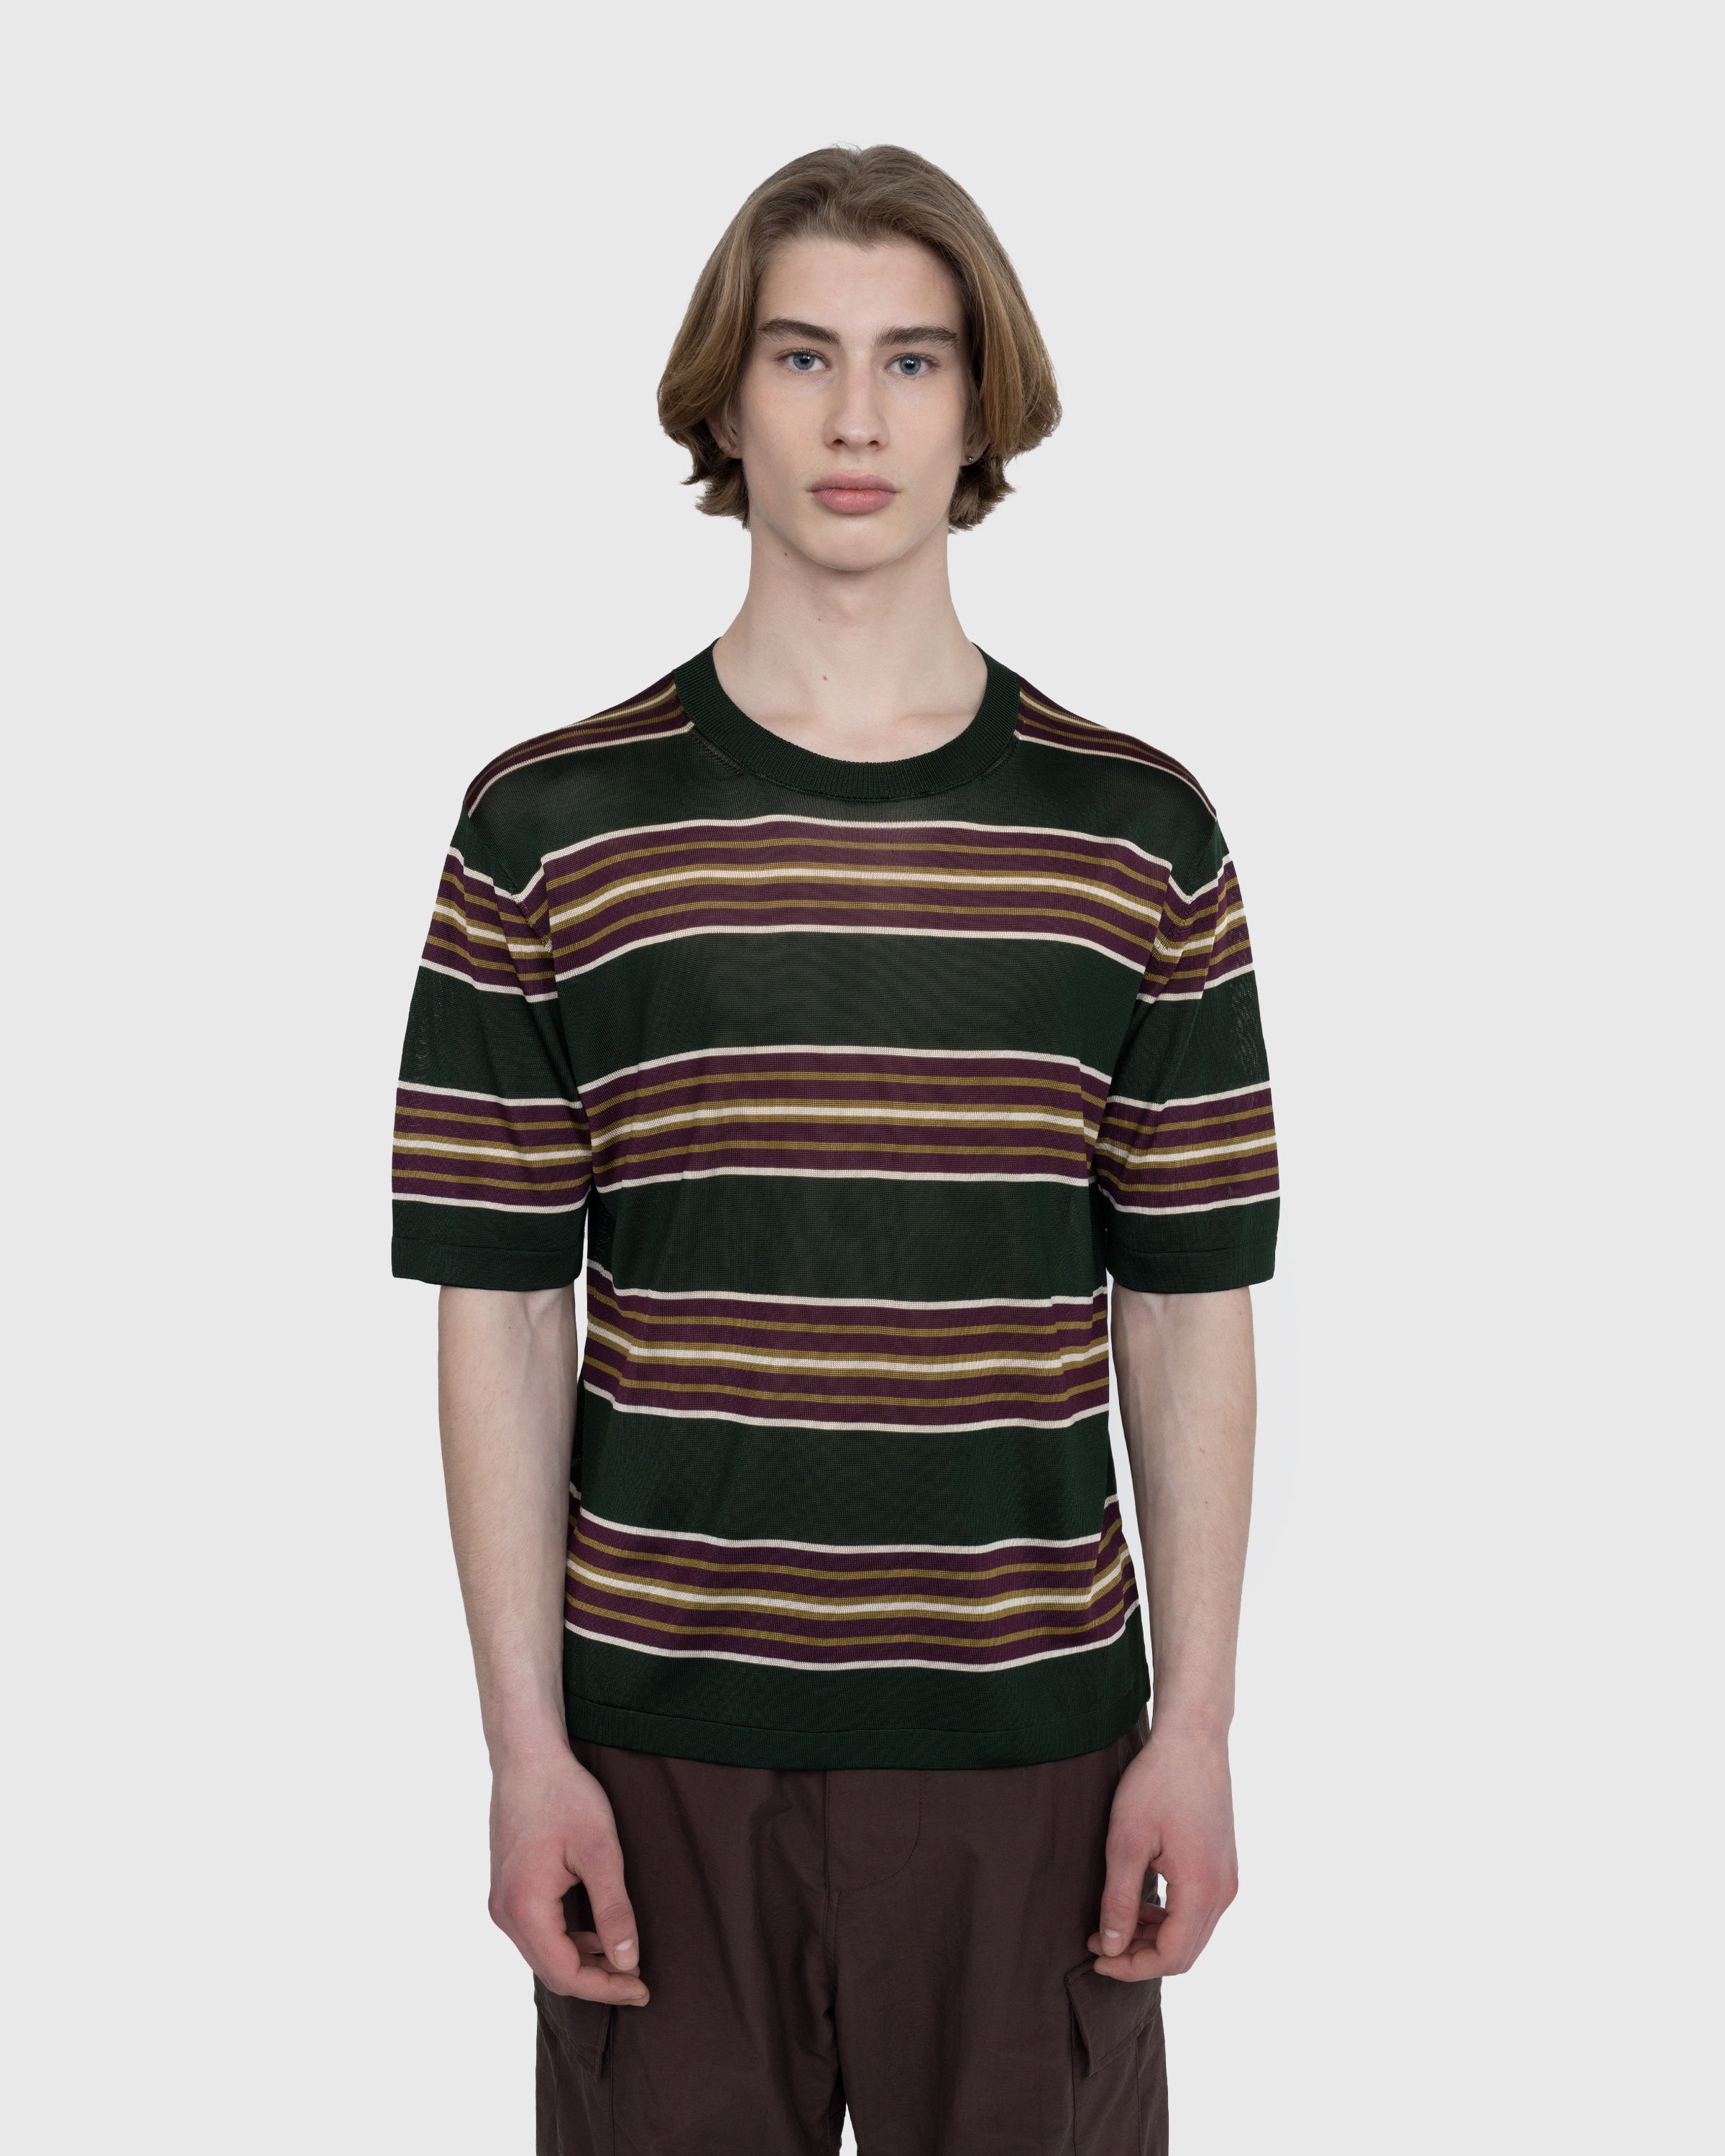 Dries van Noten - Mias Knit T-Shirt Bottle - Clothing - Green - Image 2